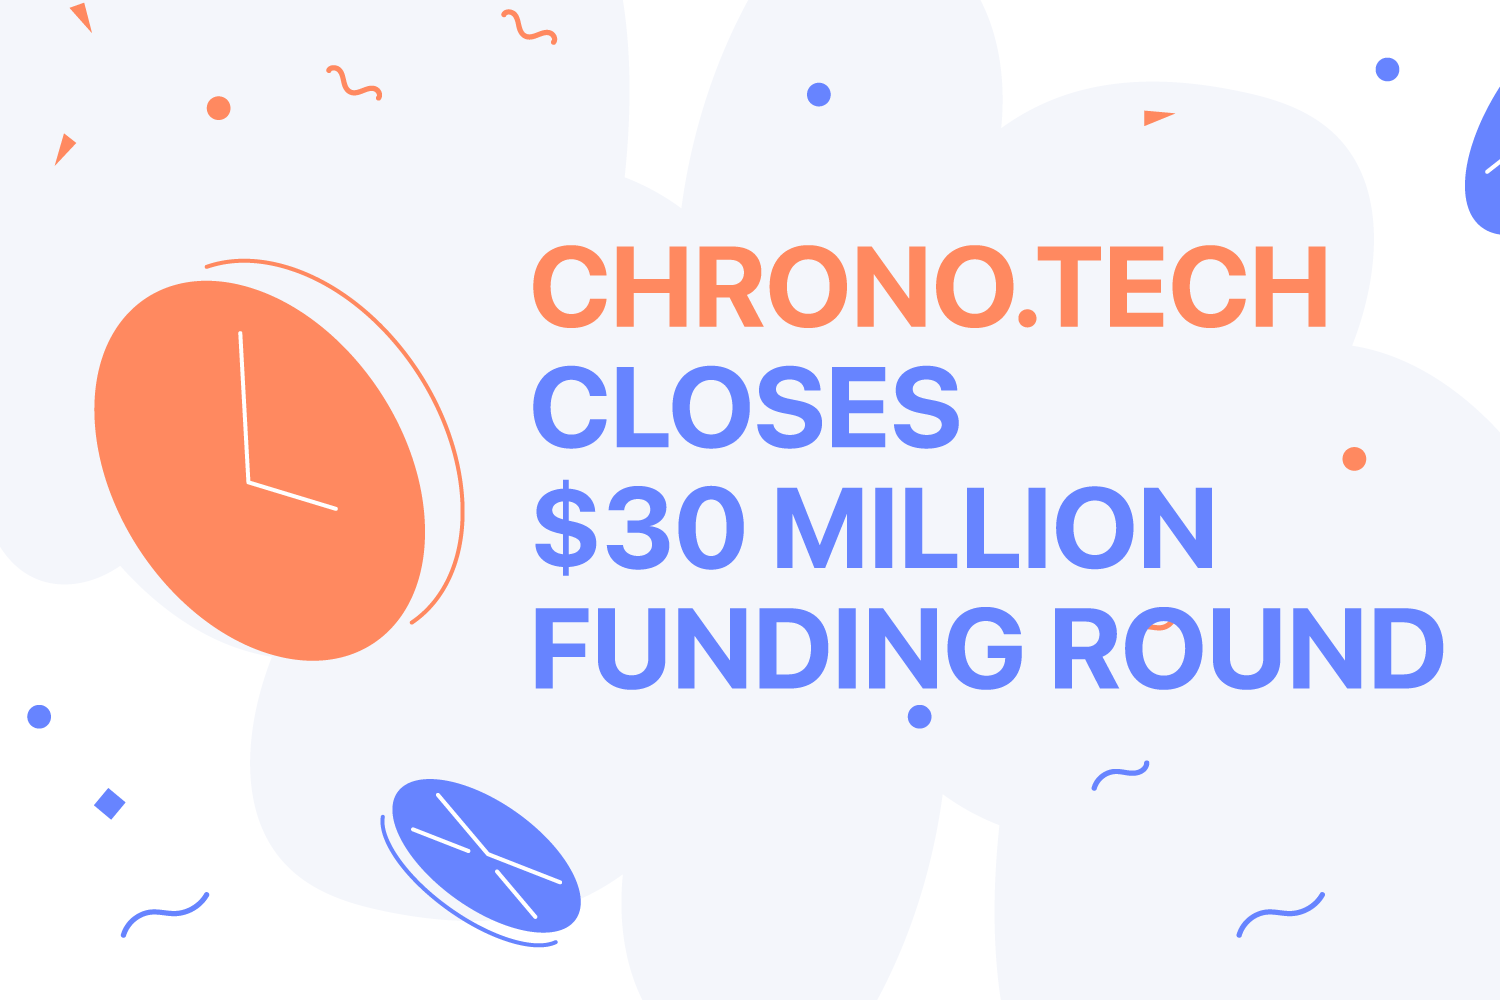 Chrono.tech Closes $30 Million Funding Round Led By Venture Capitalist Mark Carnegie